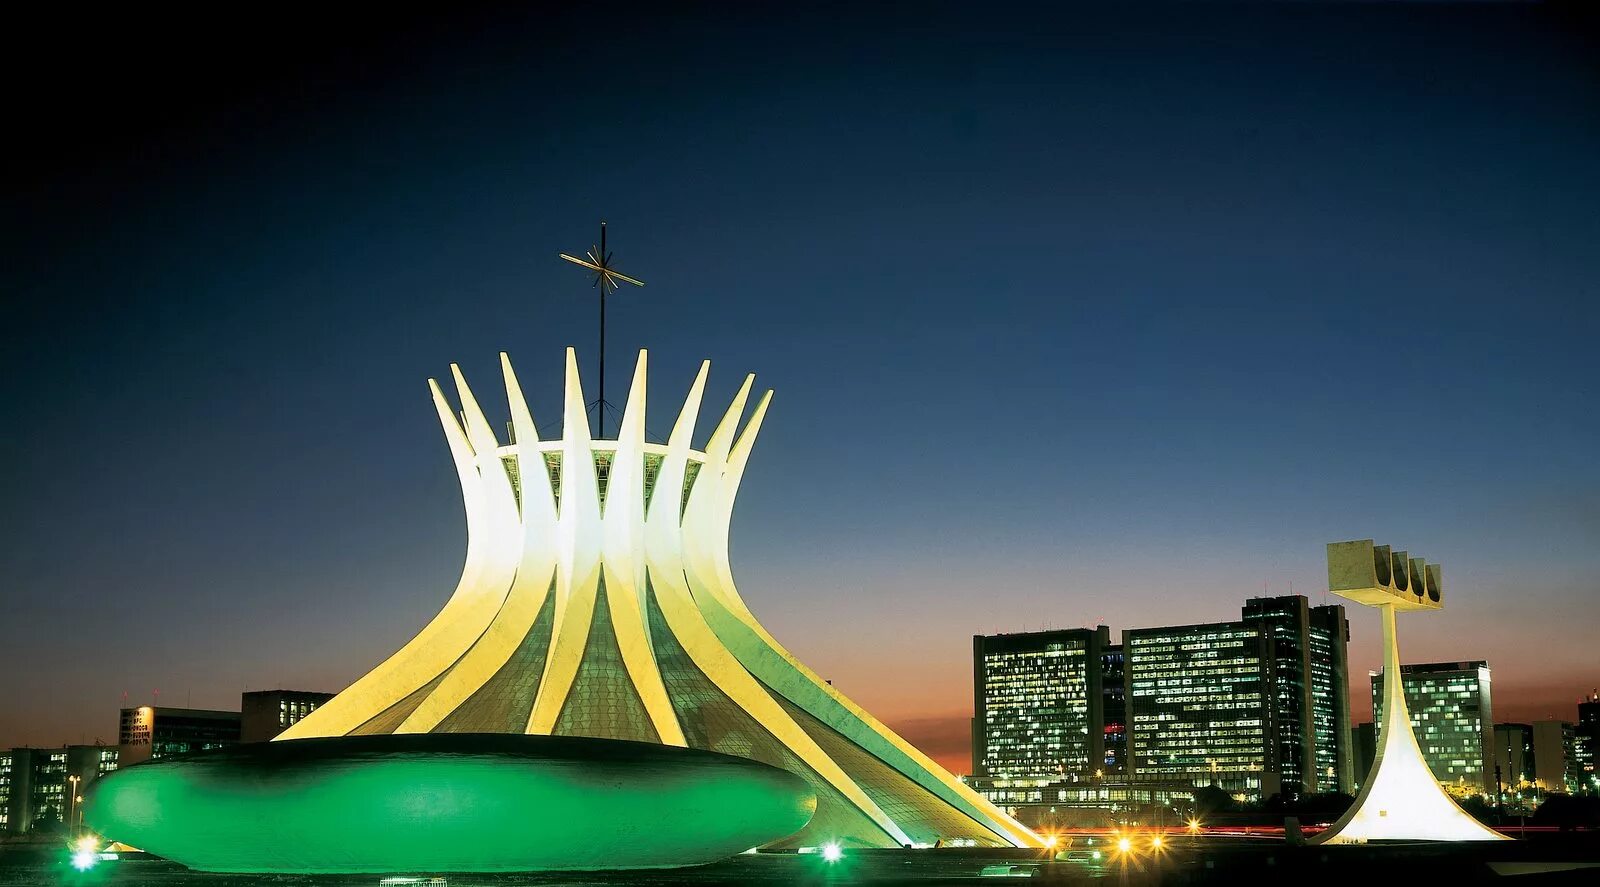 Столица Бразилиа столица Бразилии. Бразилия город Бразилиа. Столица Бразилии Бразилиа ночью. Бразилия столица площадь